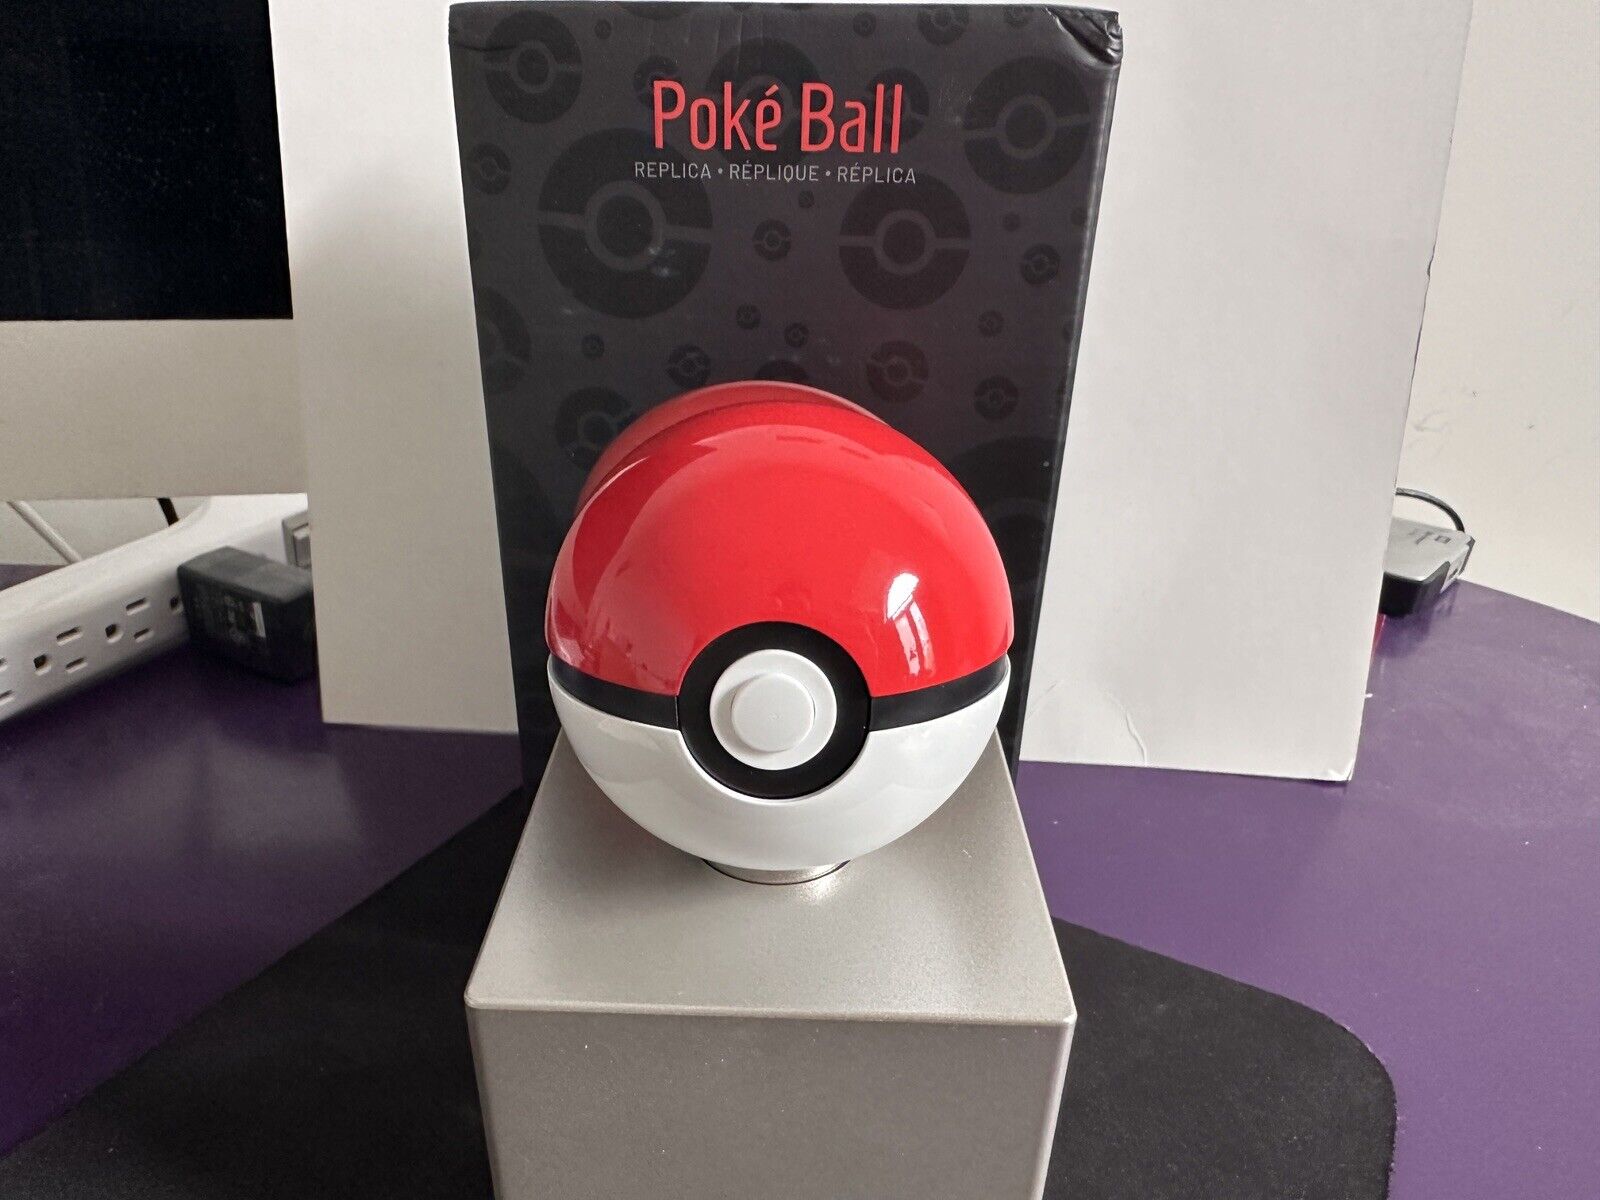 Pokemon Die-Cast Pokeball Replica by The Wand Company Figure Red Poke Ball